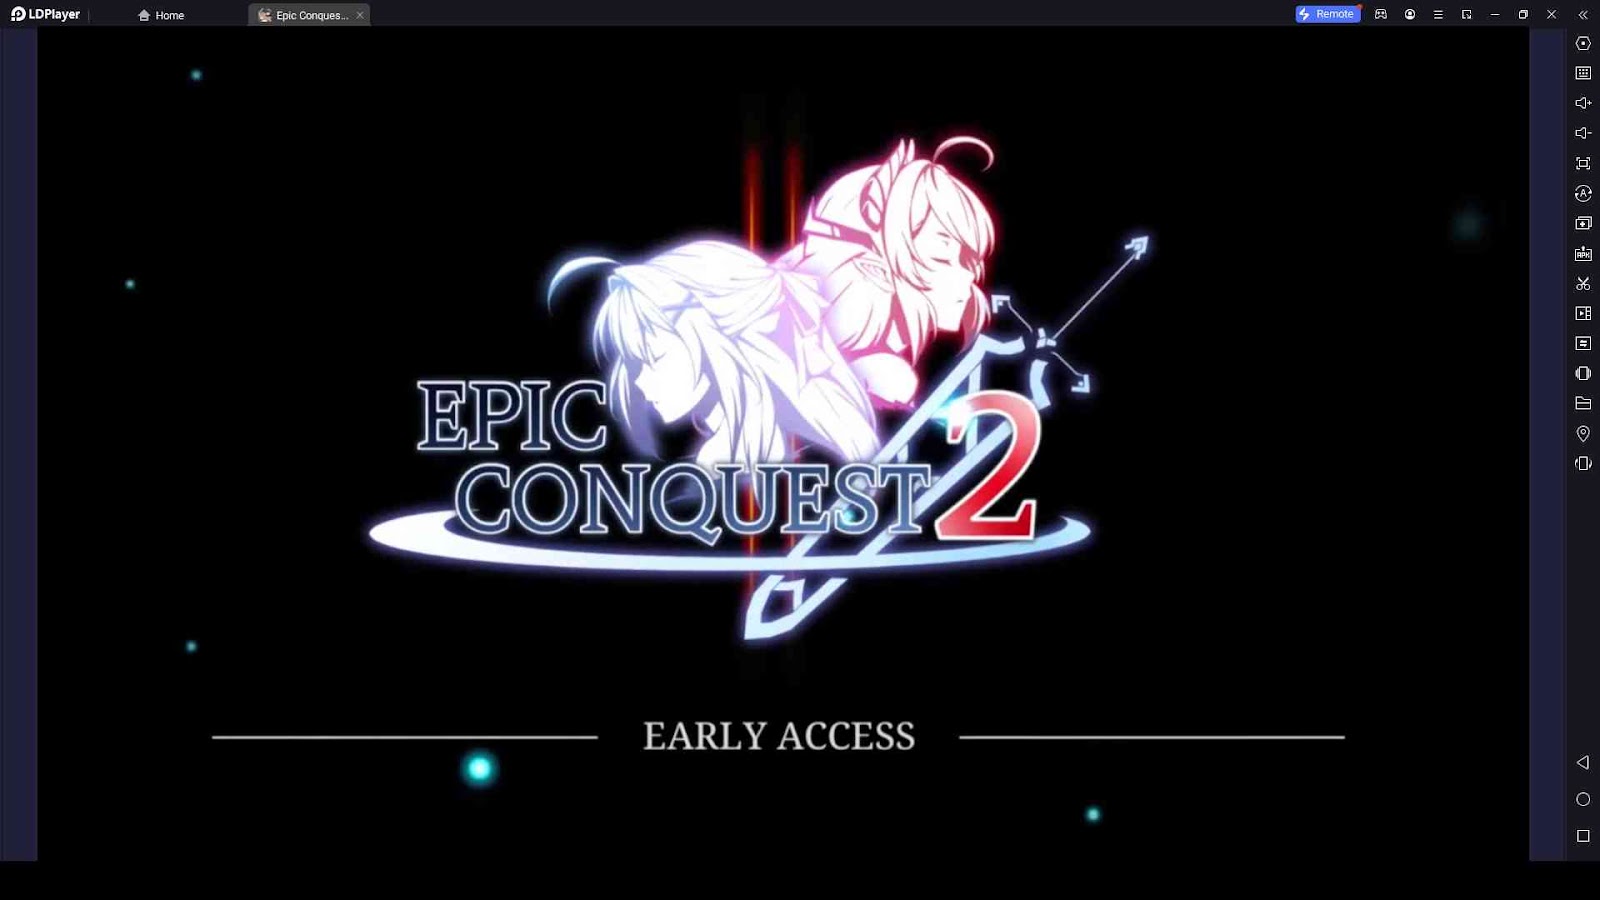 Epic Conquest 2 Codes